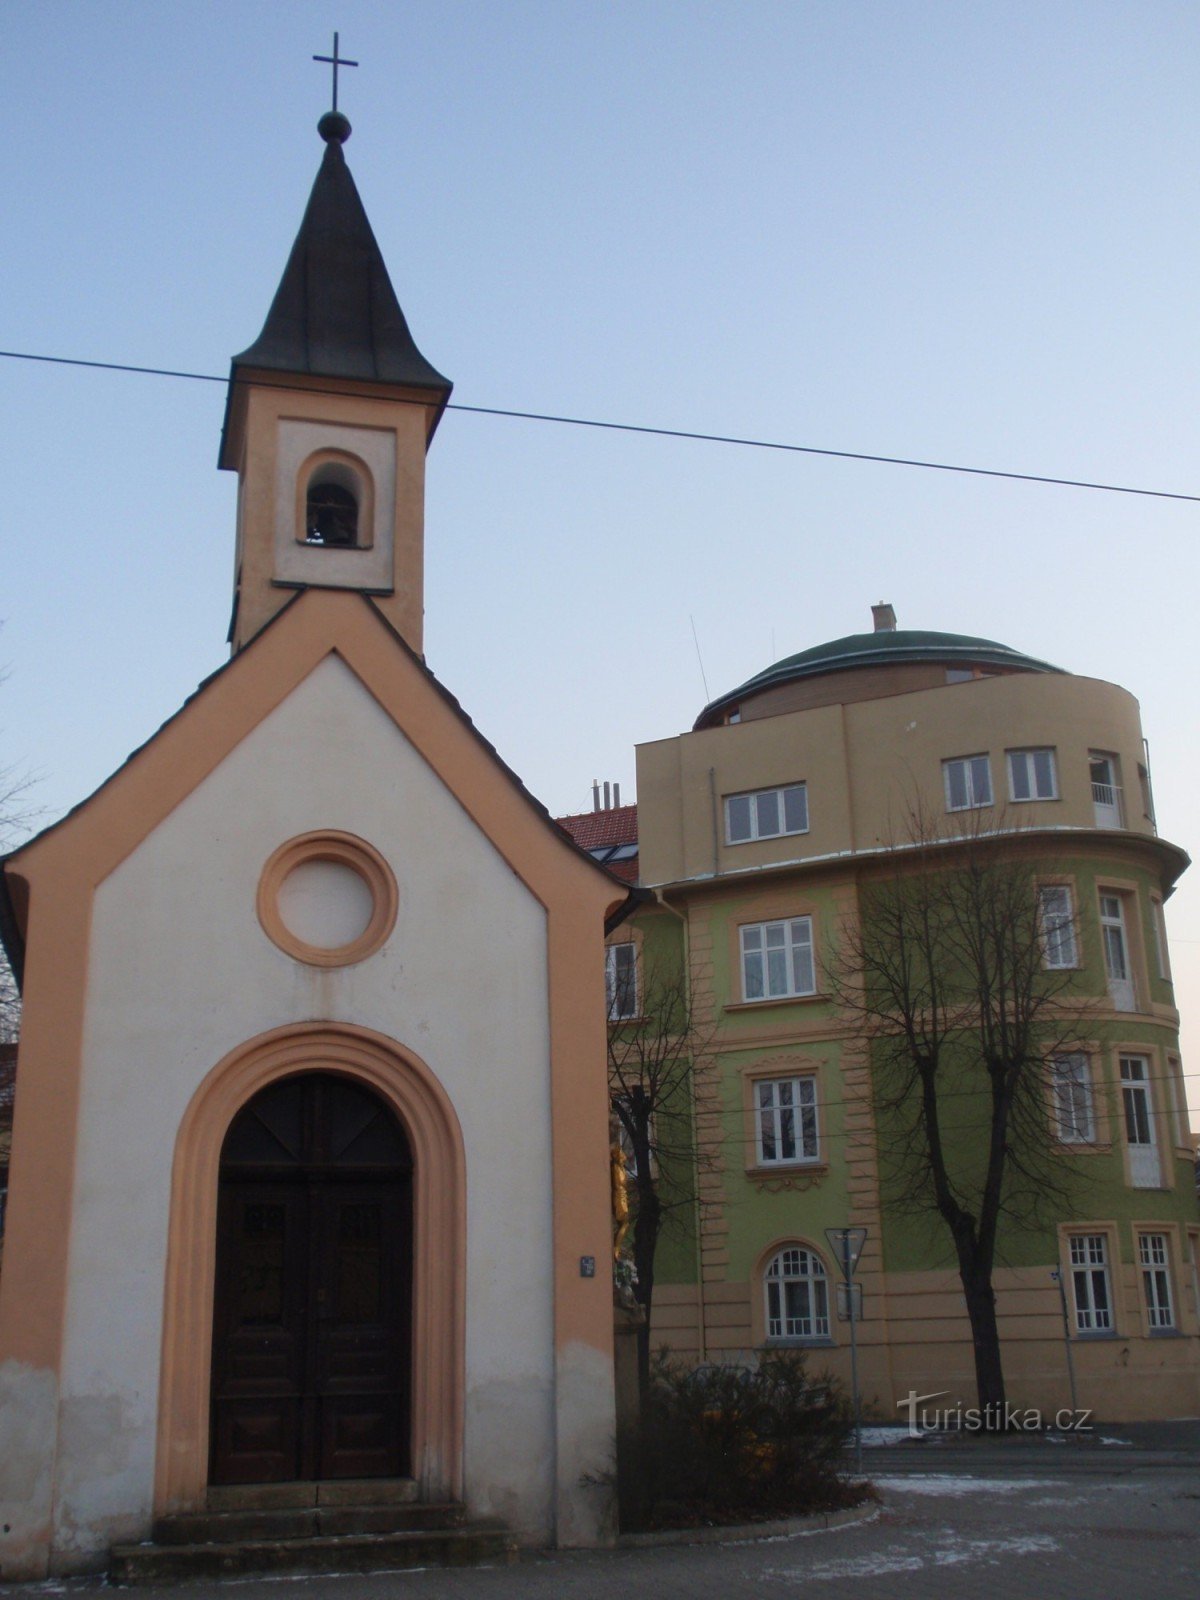 Kapel af St. Františka i Brno-Židenice